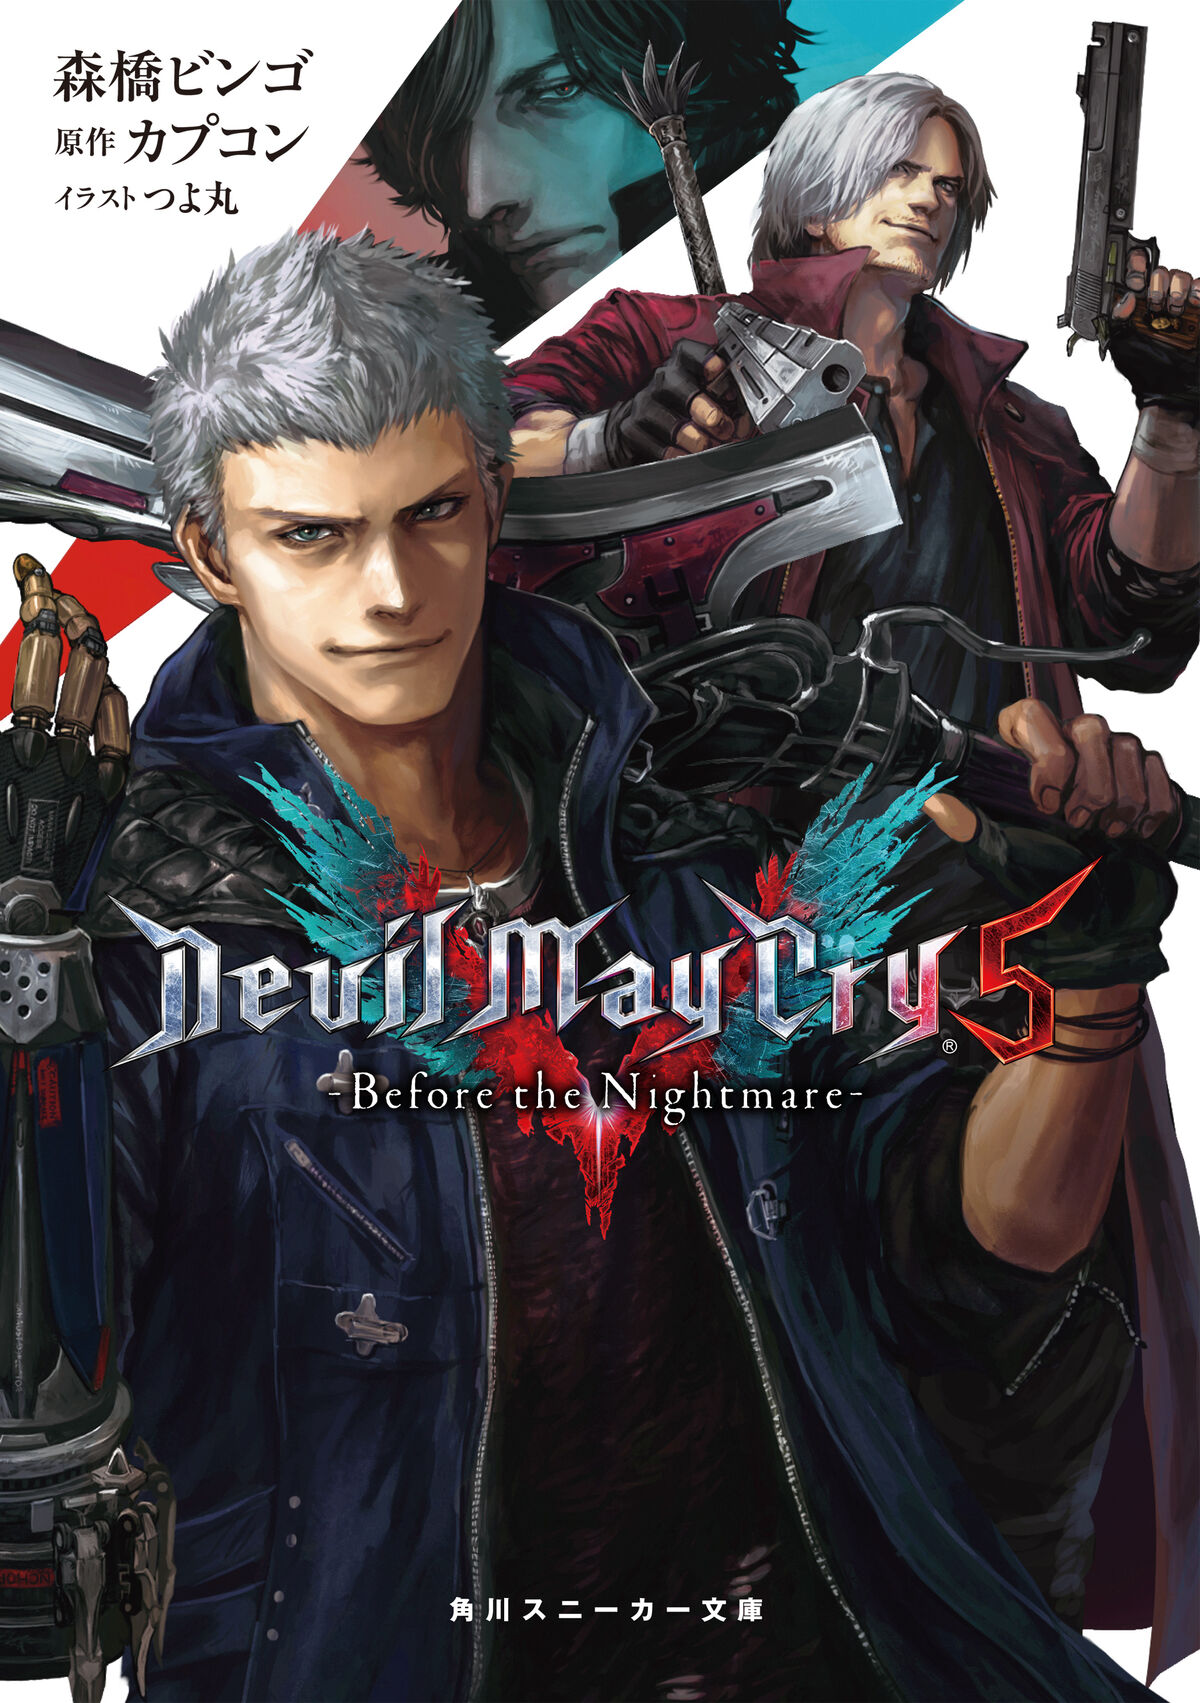 DMC5, Playable Characters: Dante, Nero, & V